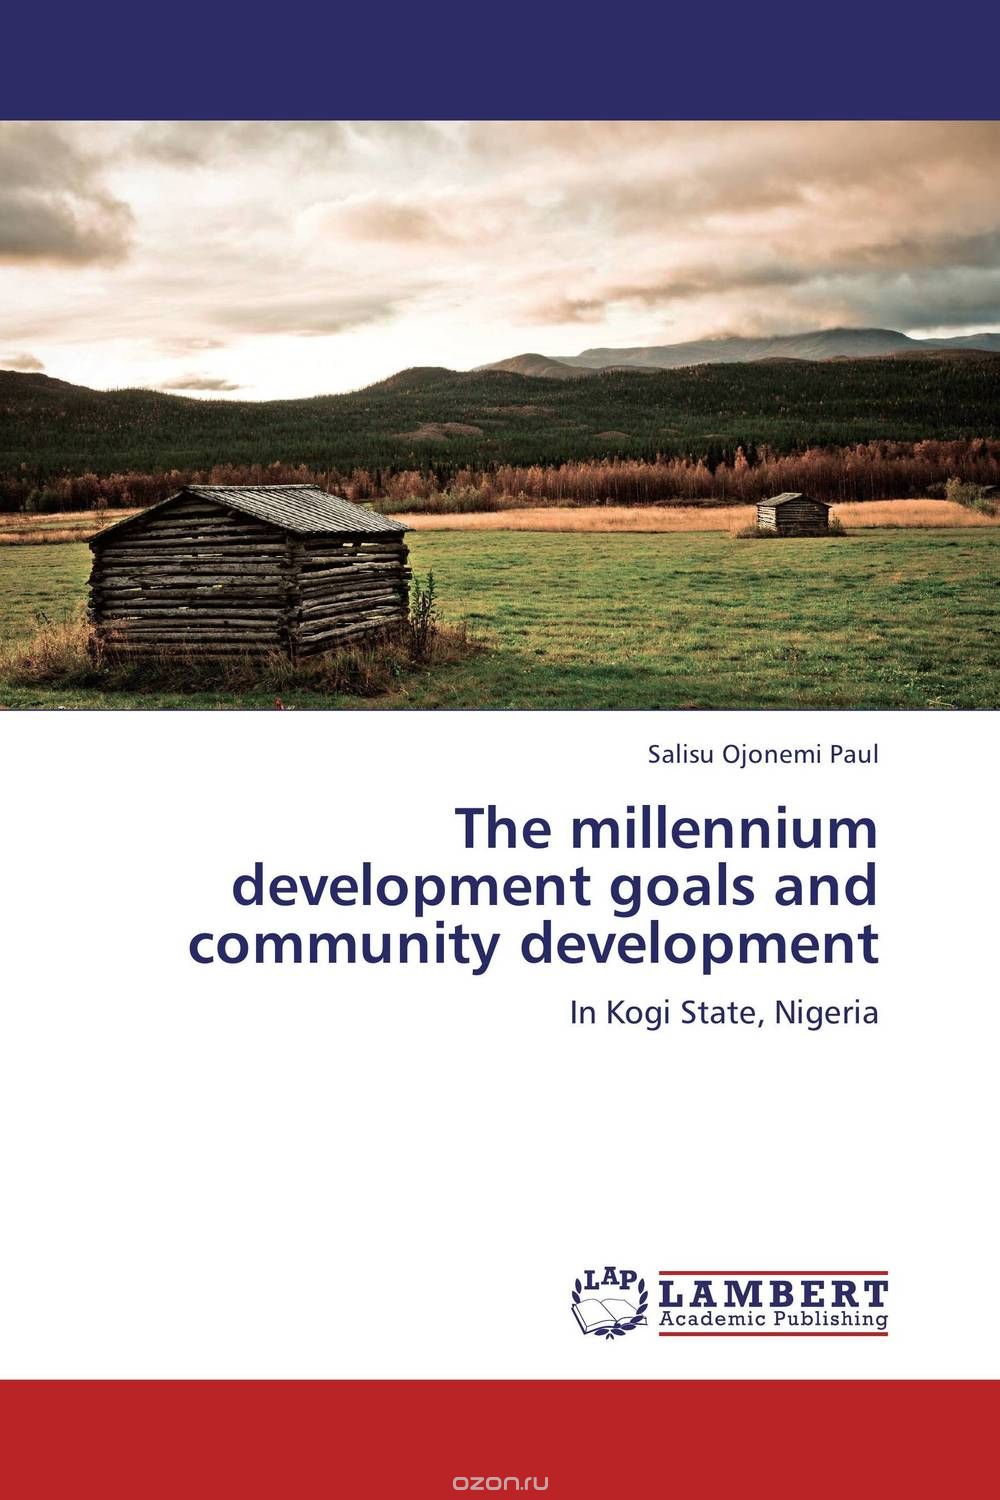 Скачать книгу "The millennium development goals and community development"